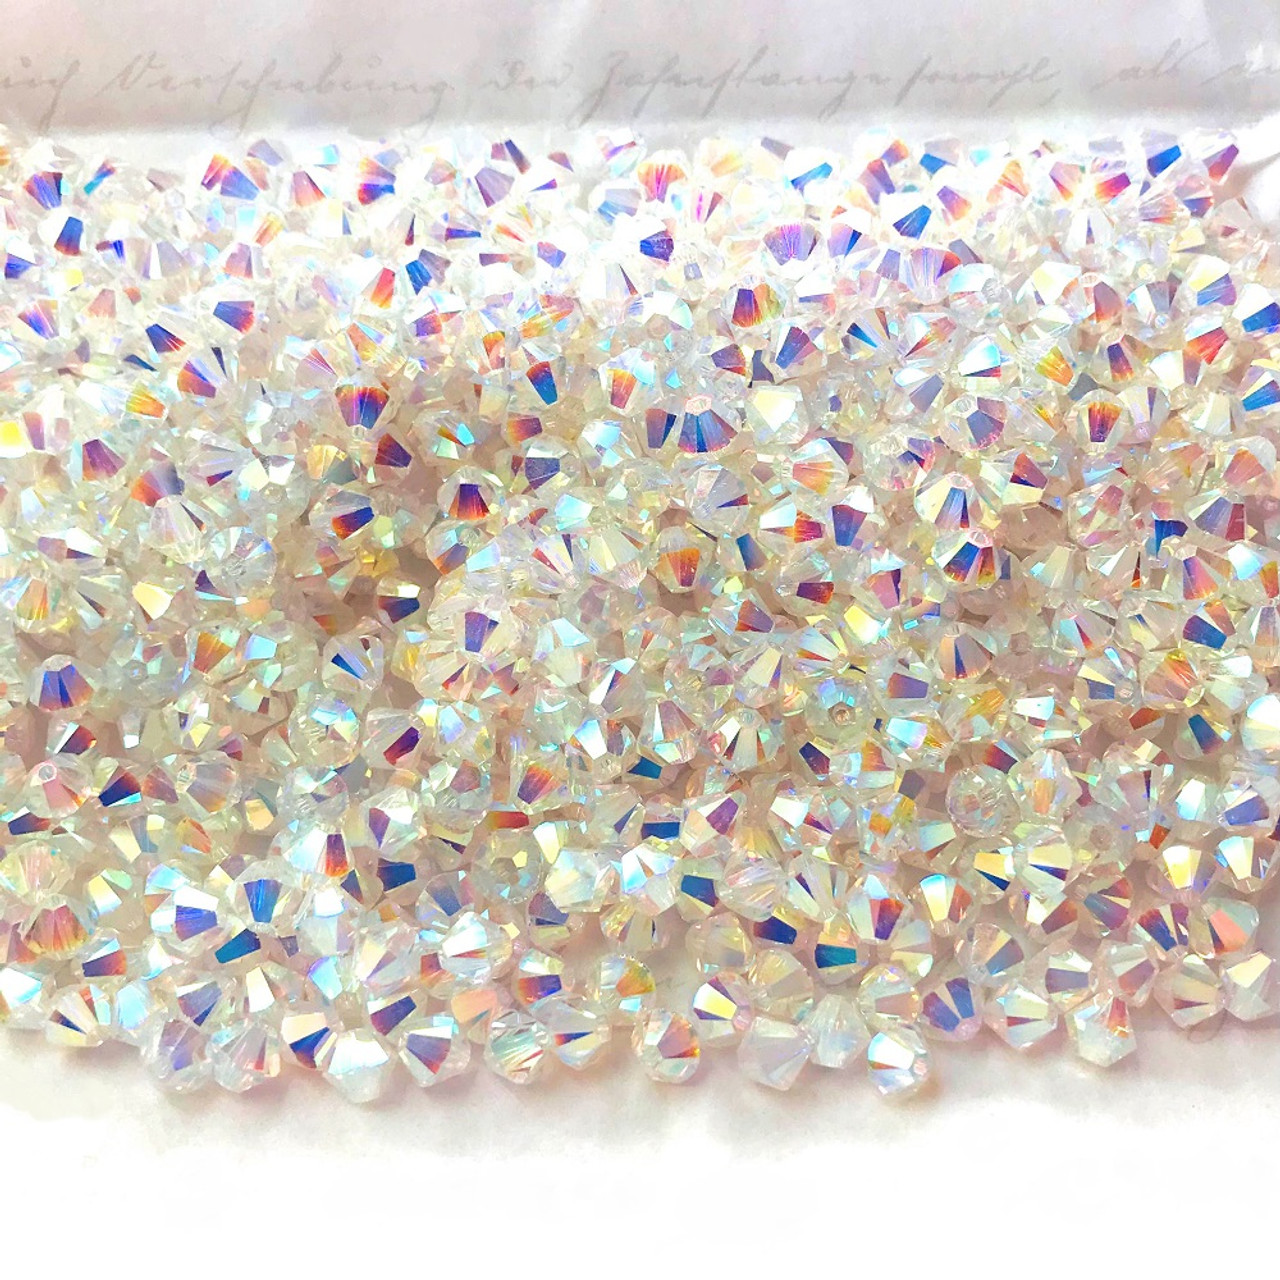 anybeads.com - Swarovski Crystal Beads at Wholesale Price: 2013